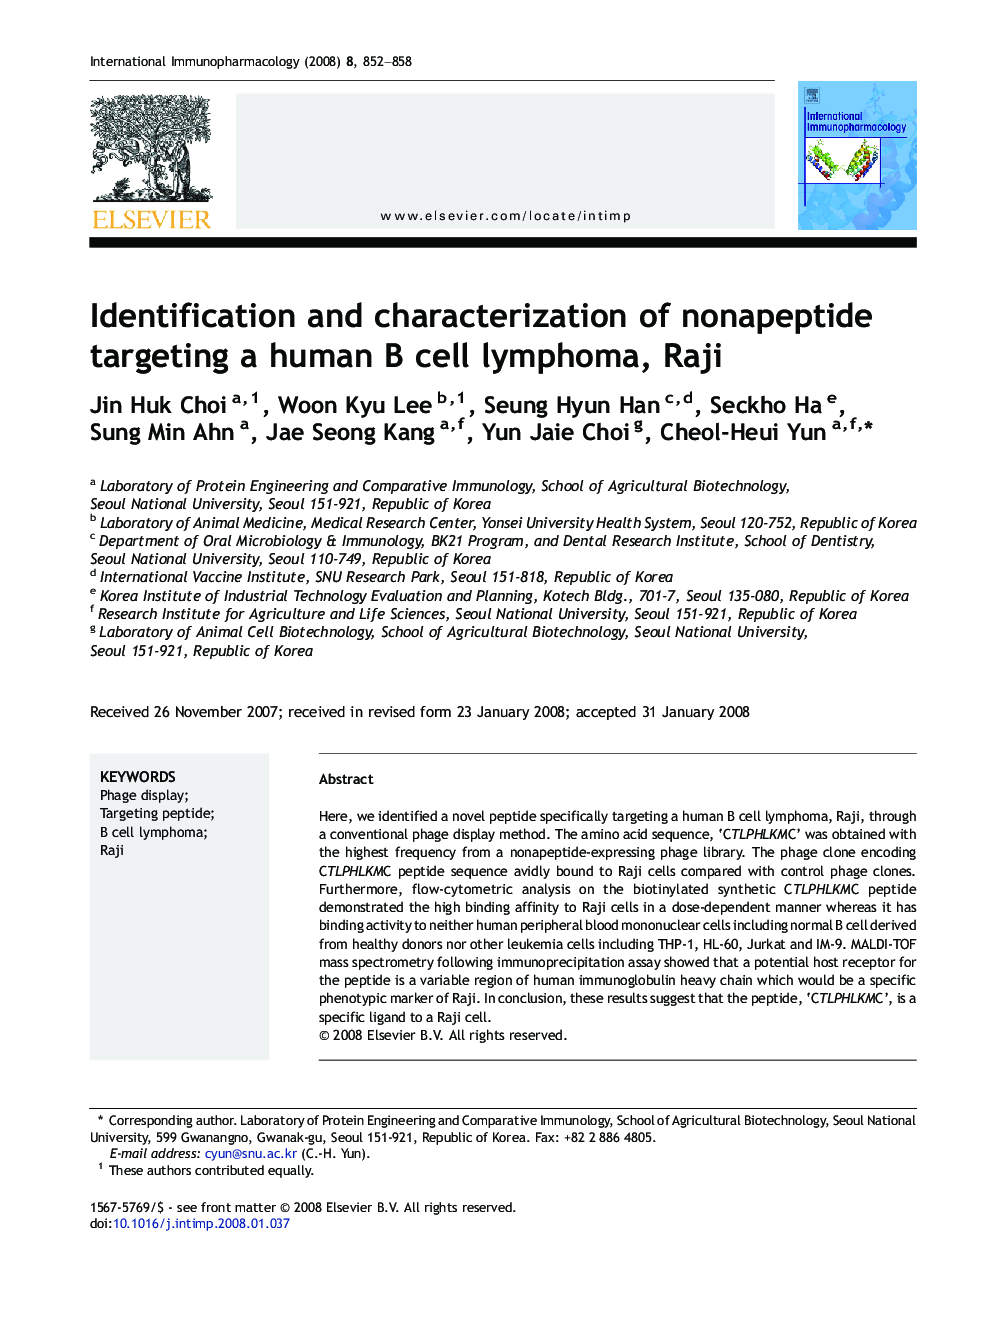 Identification and characterization of nonapeptide targeting a human B cell lymphoma, Raji